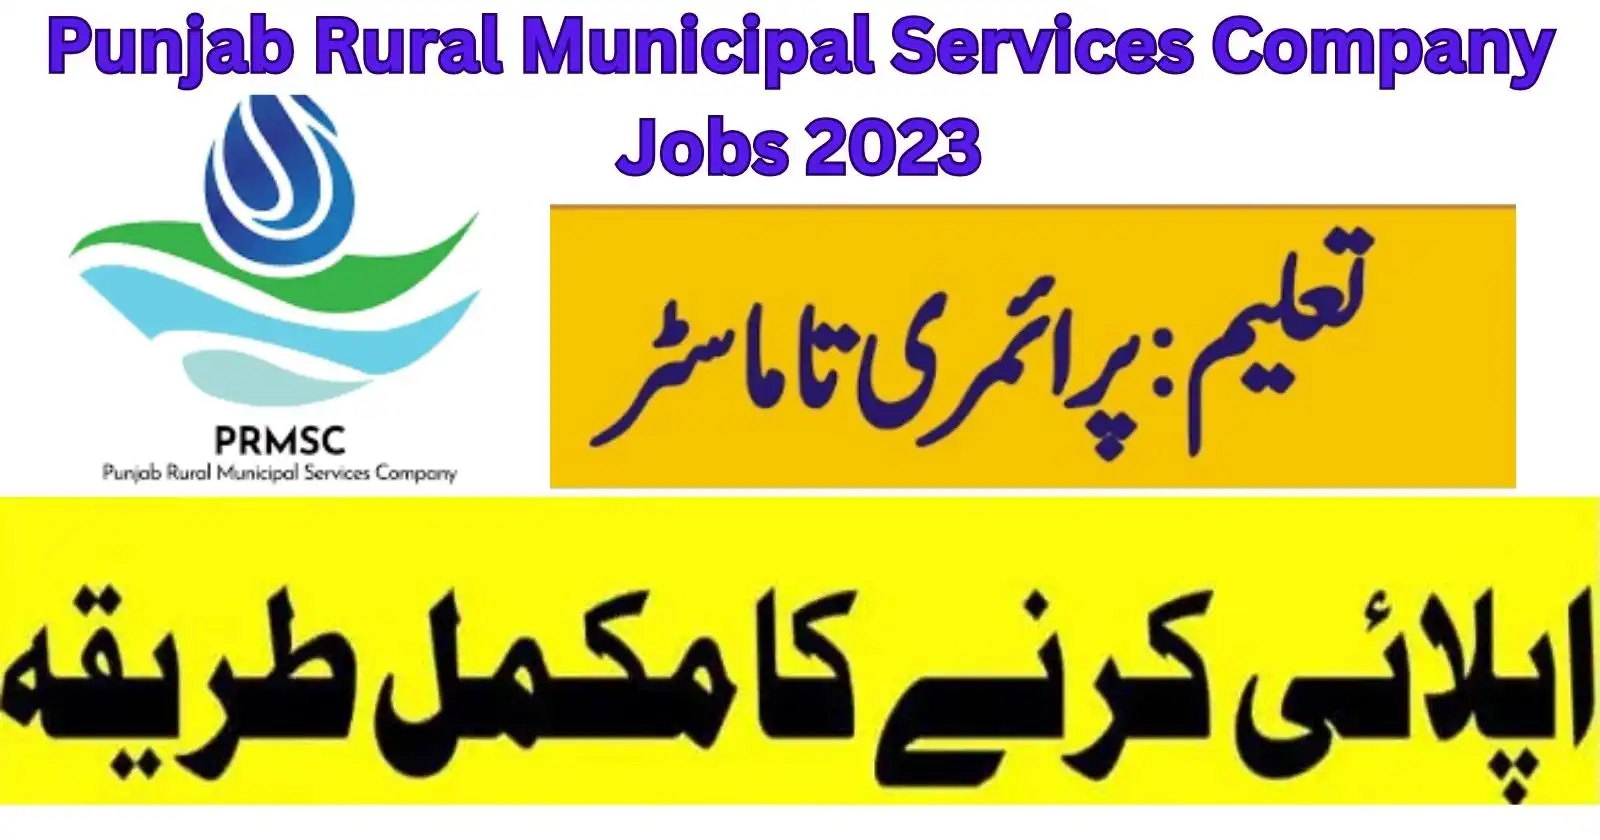 Punjab Rural Municipal Services Company Jobs 2023